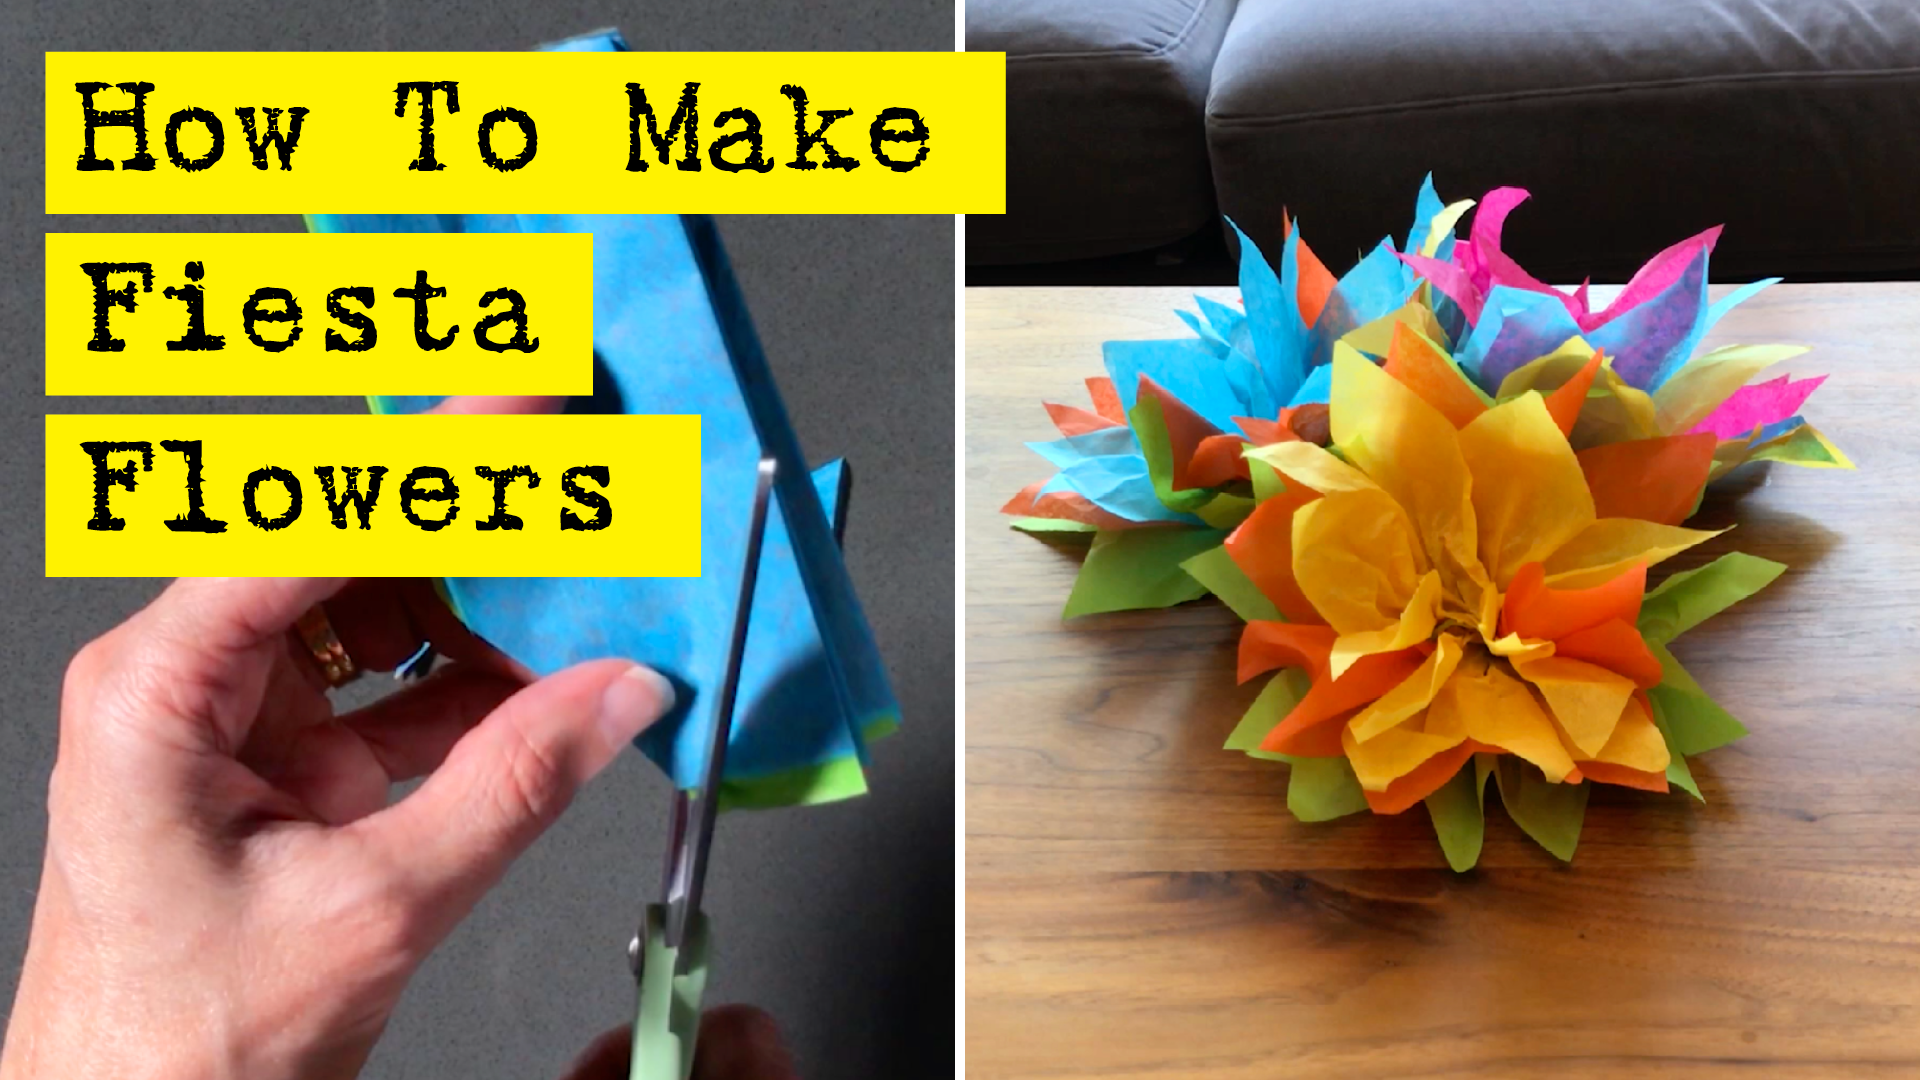 How To Make Fiesta Flowers by DIY Presto!